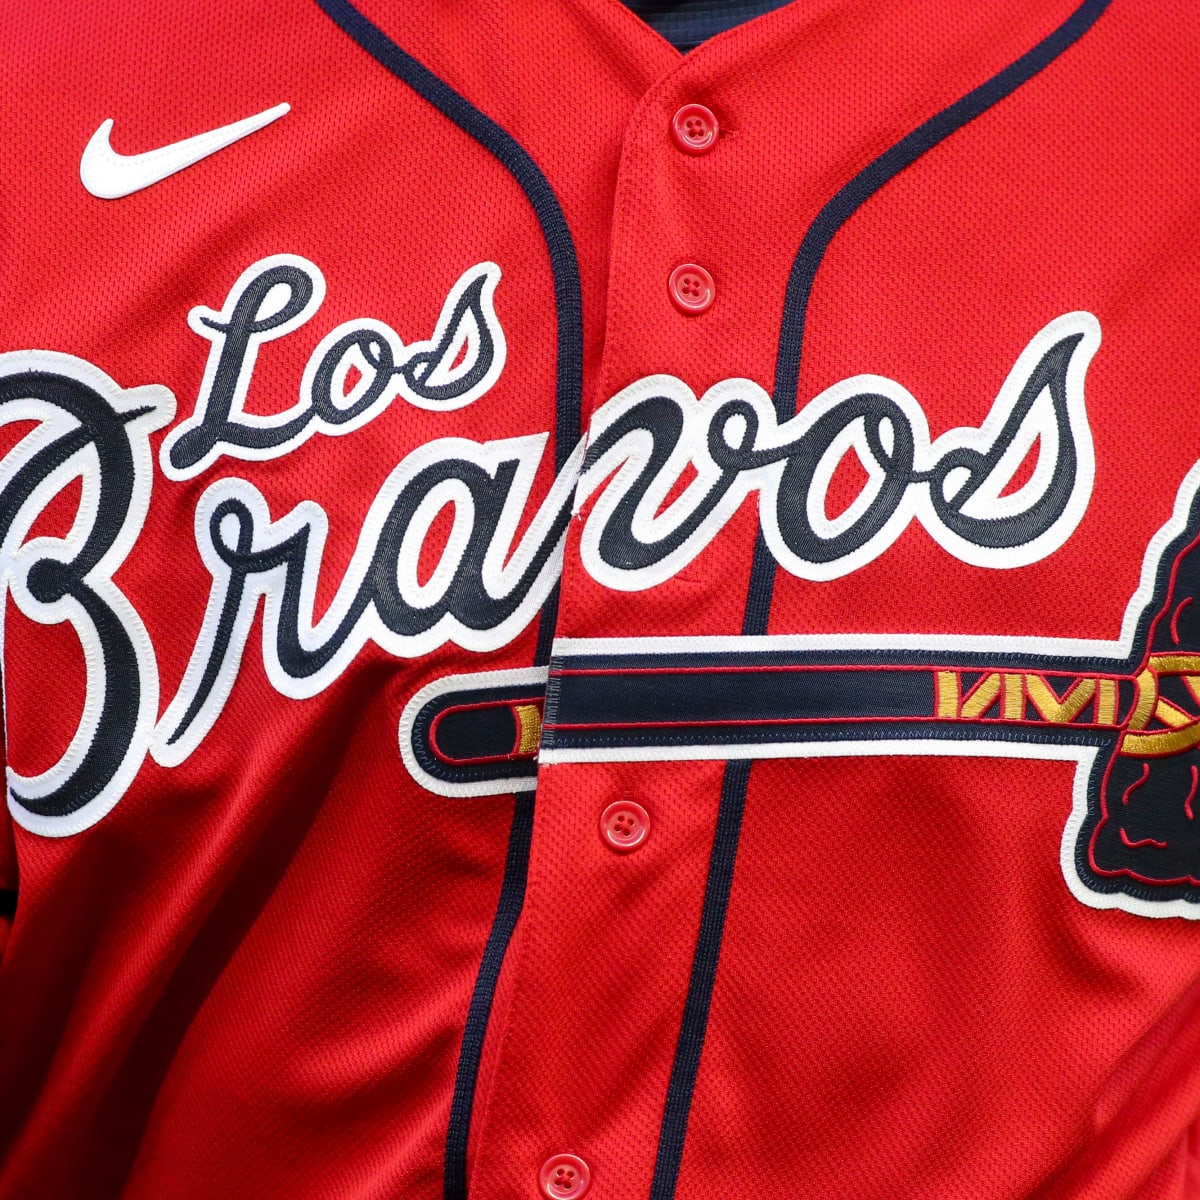 Los Bravos de ATL Atlanta Braves shirt